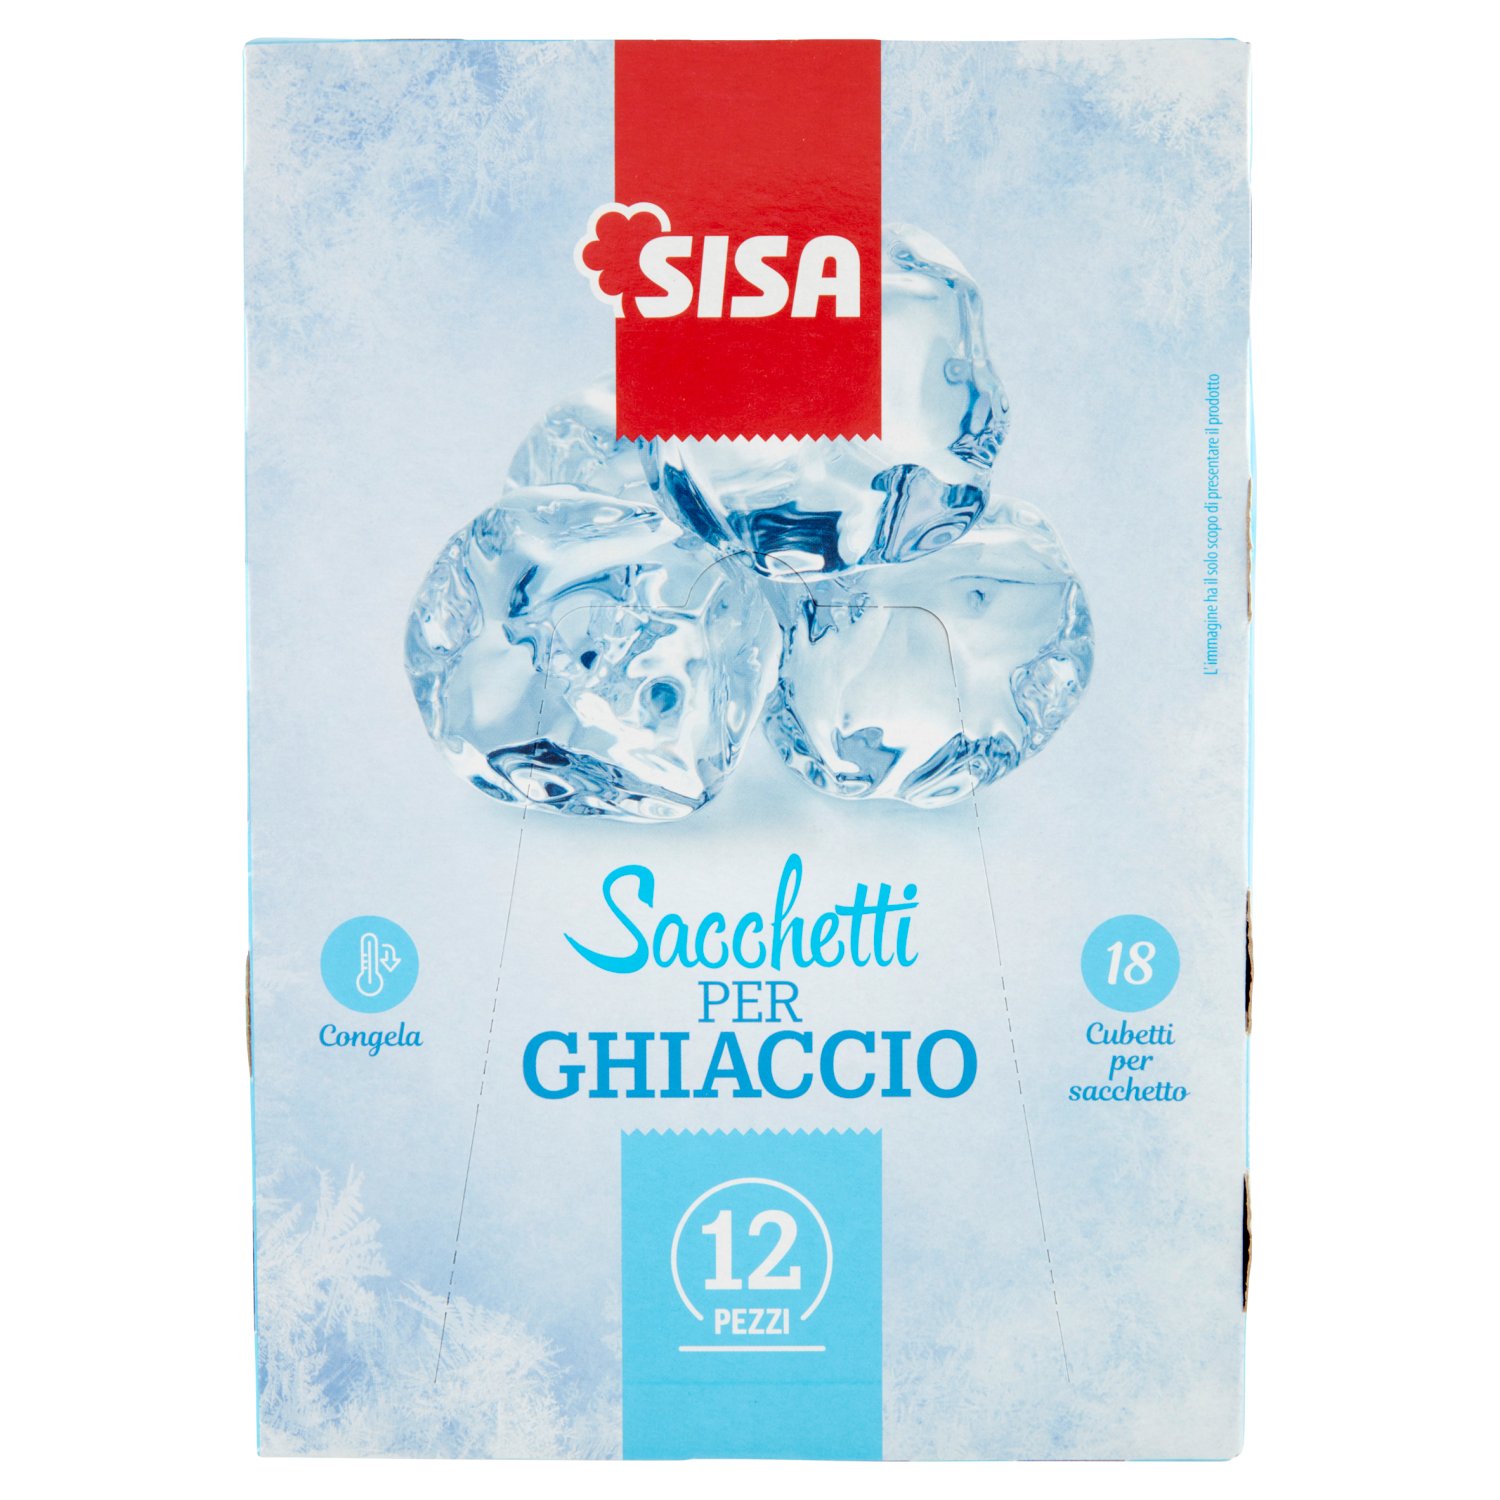 Sisa Sacchetti per Ghiaccio 12 pz - SuperSISA